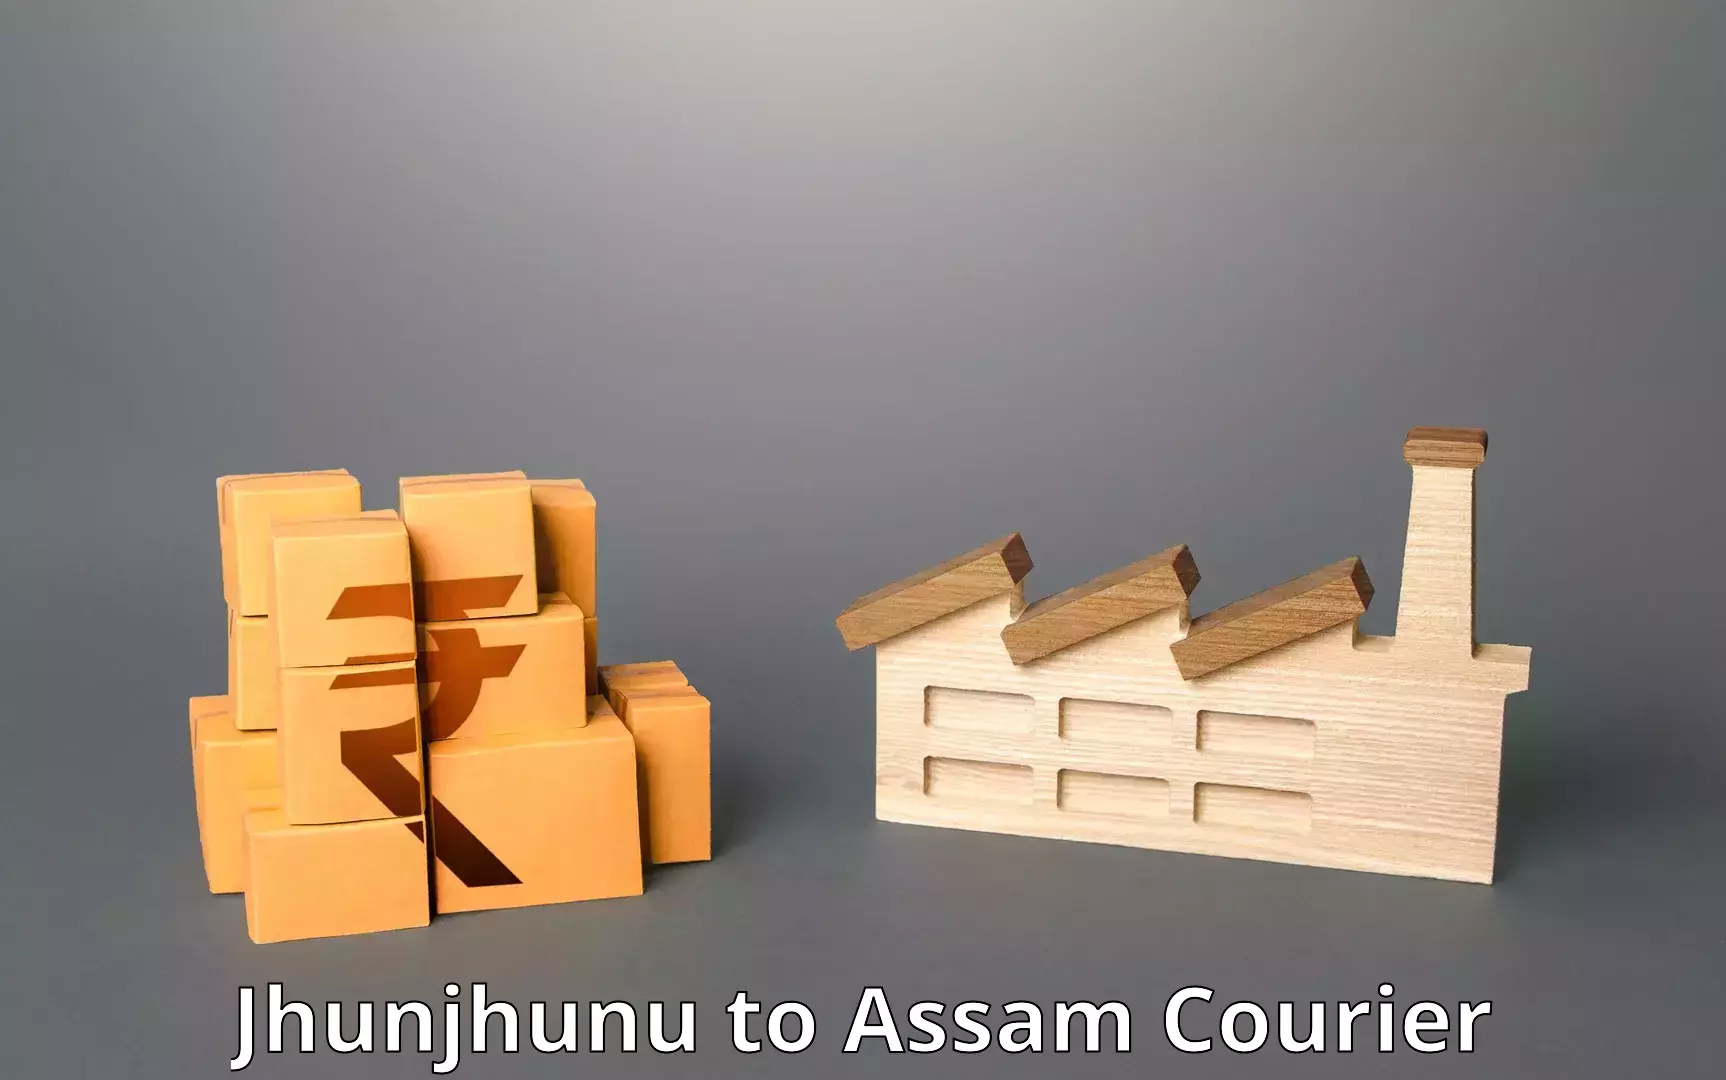 Automated shipping processes Jhunjhunu to Behali